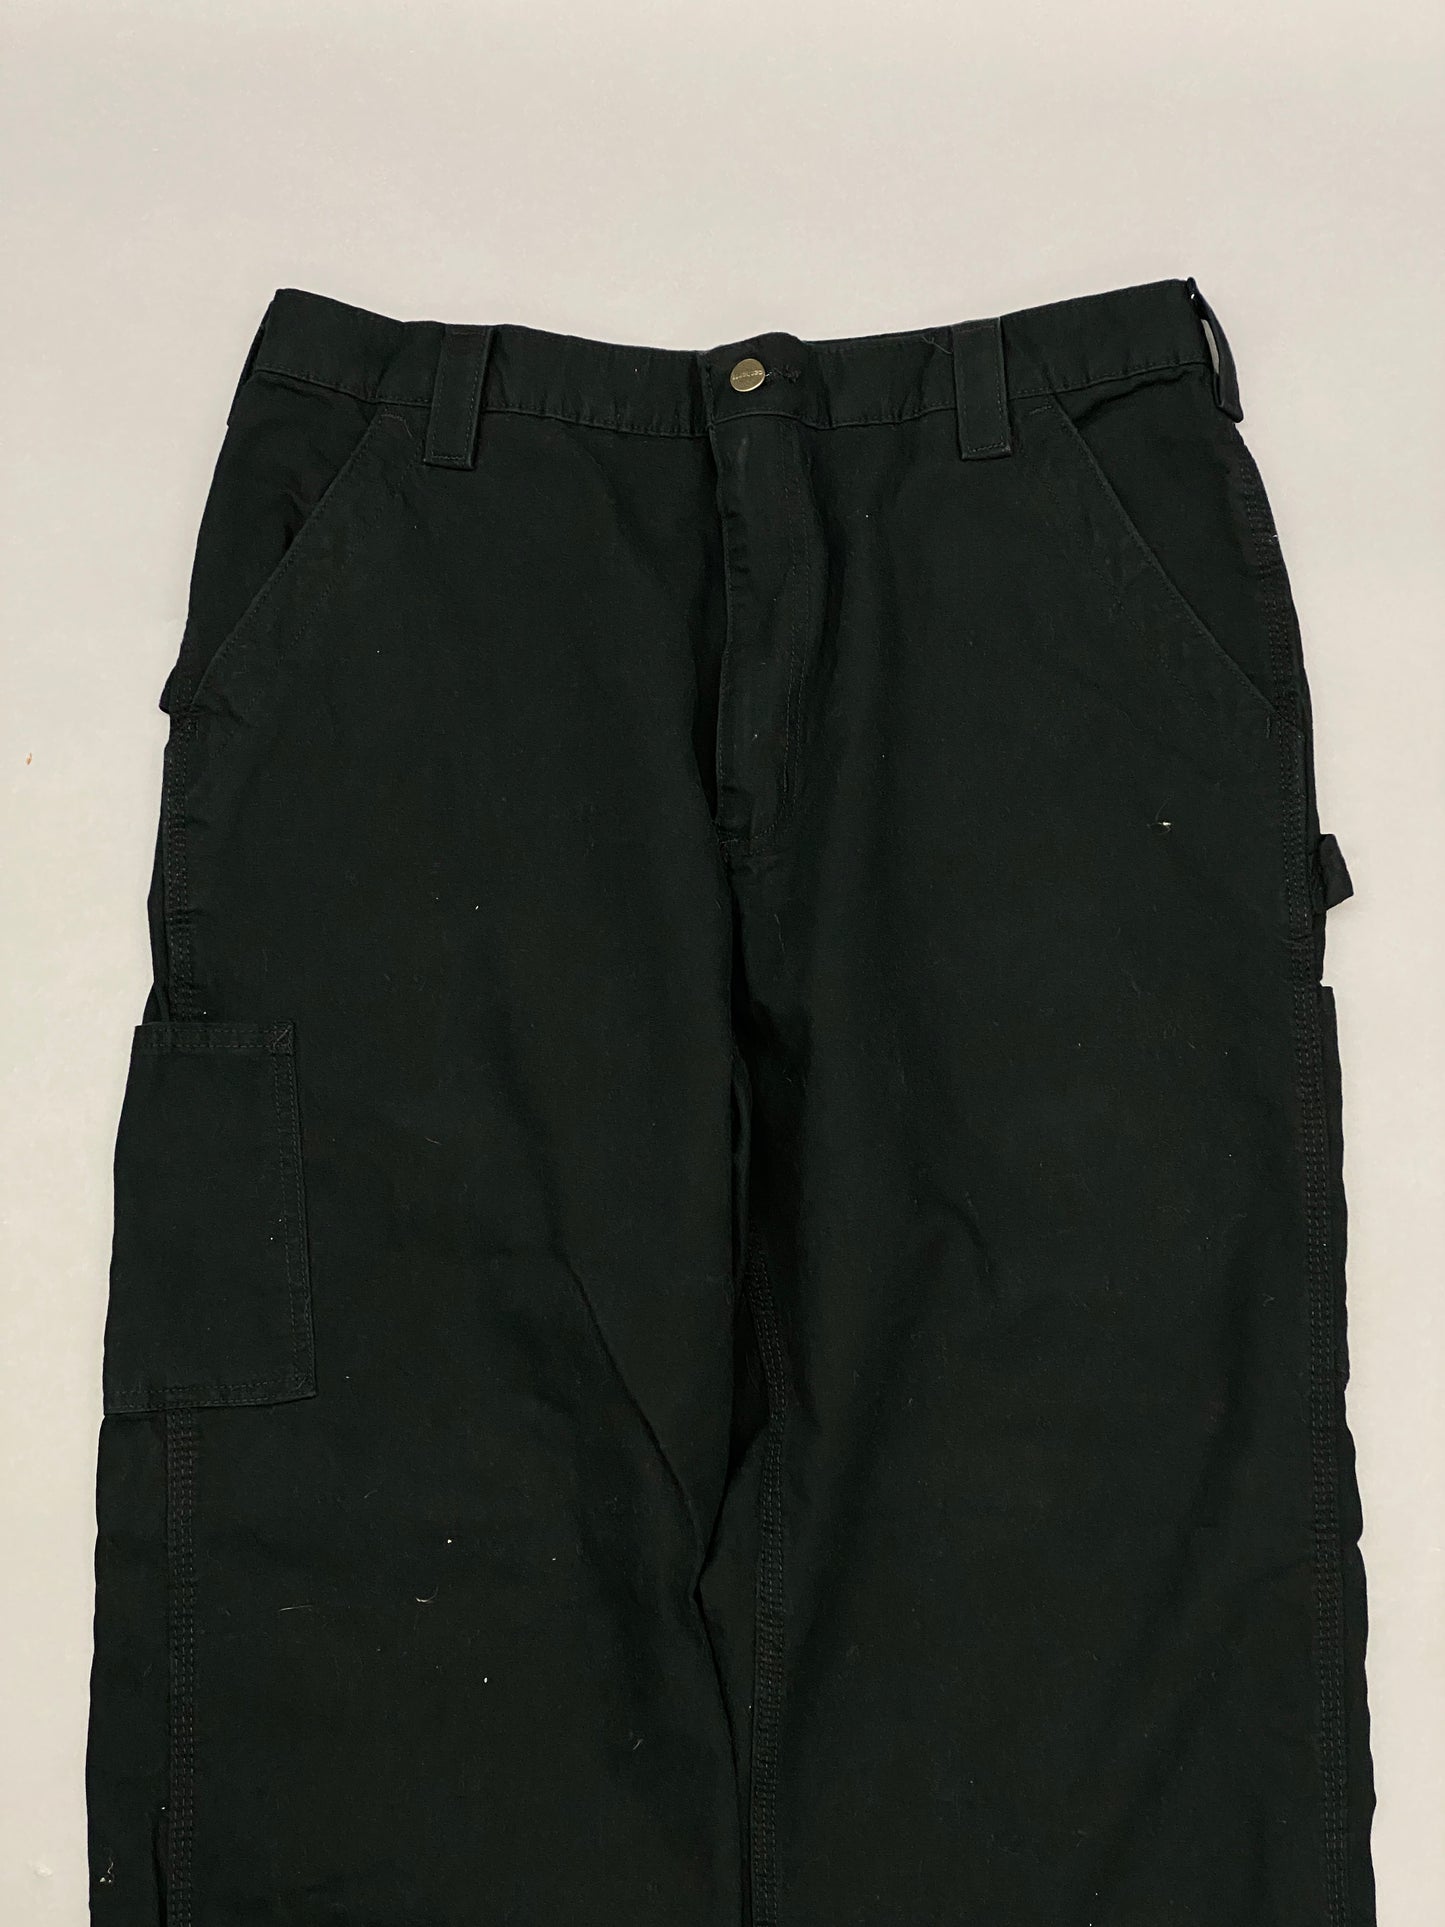 Carhartt Carpenter Pants - 36 x 32